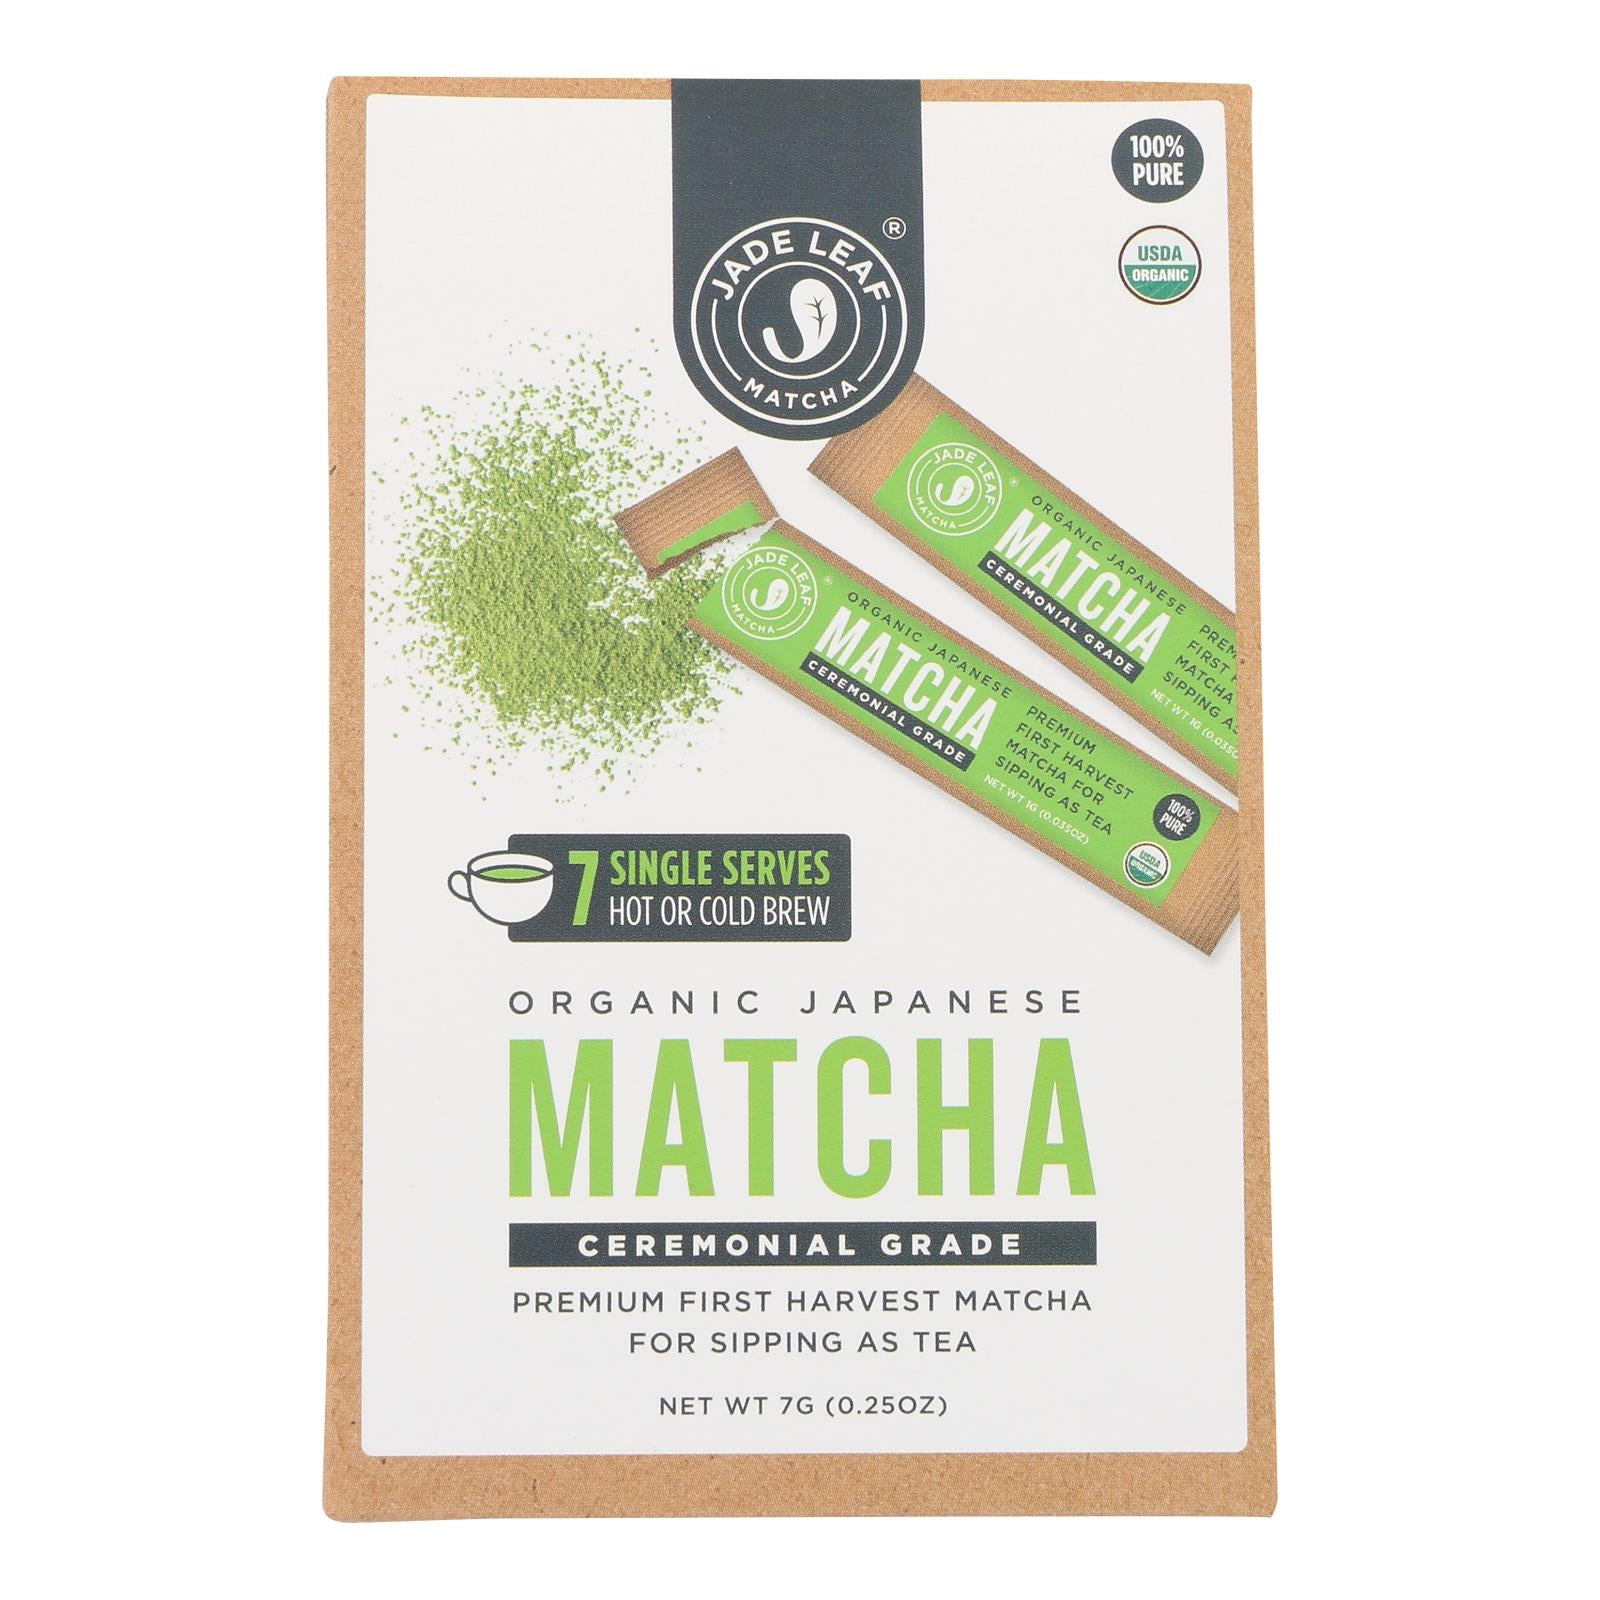 Jade Leaf Organics - Tea - Ceremonial Matcha - Case Of 8 - 0.7 Oz. - Whole Green Foods